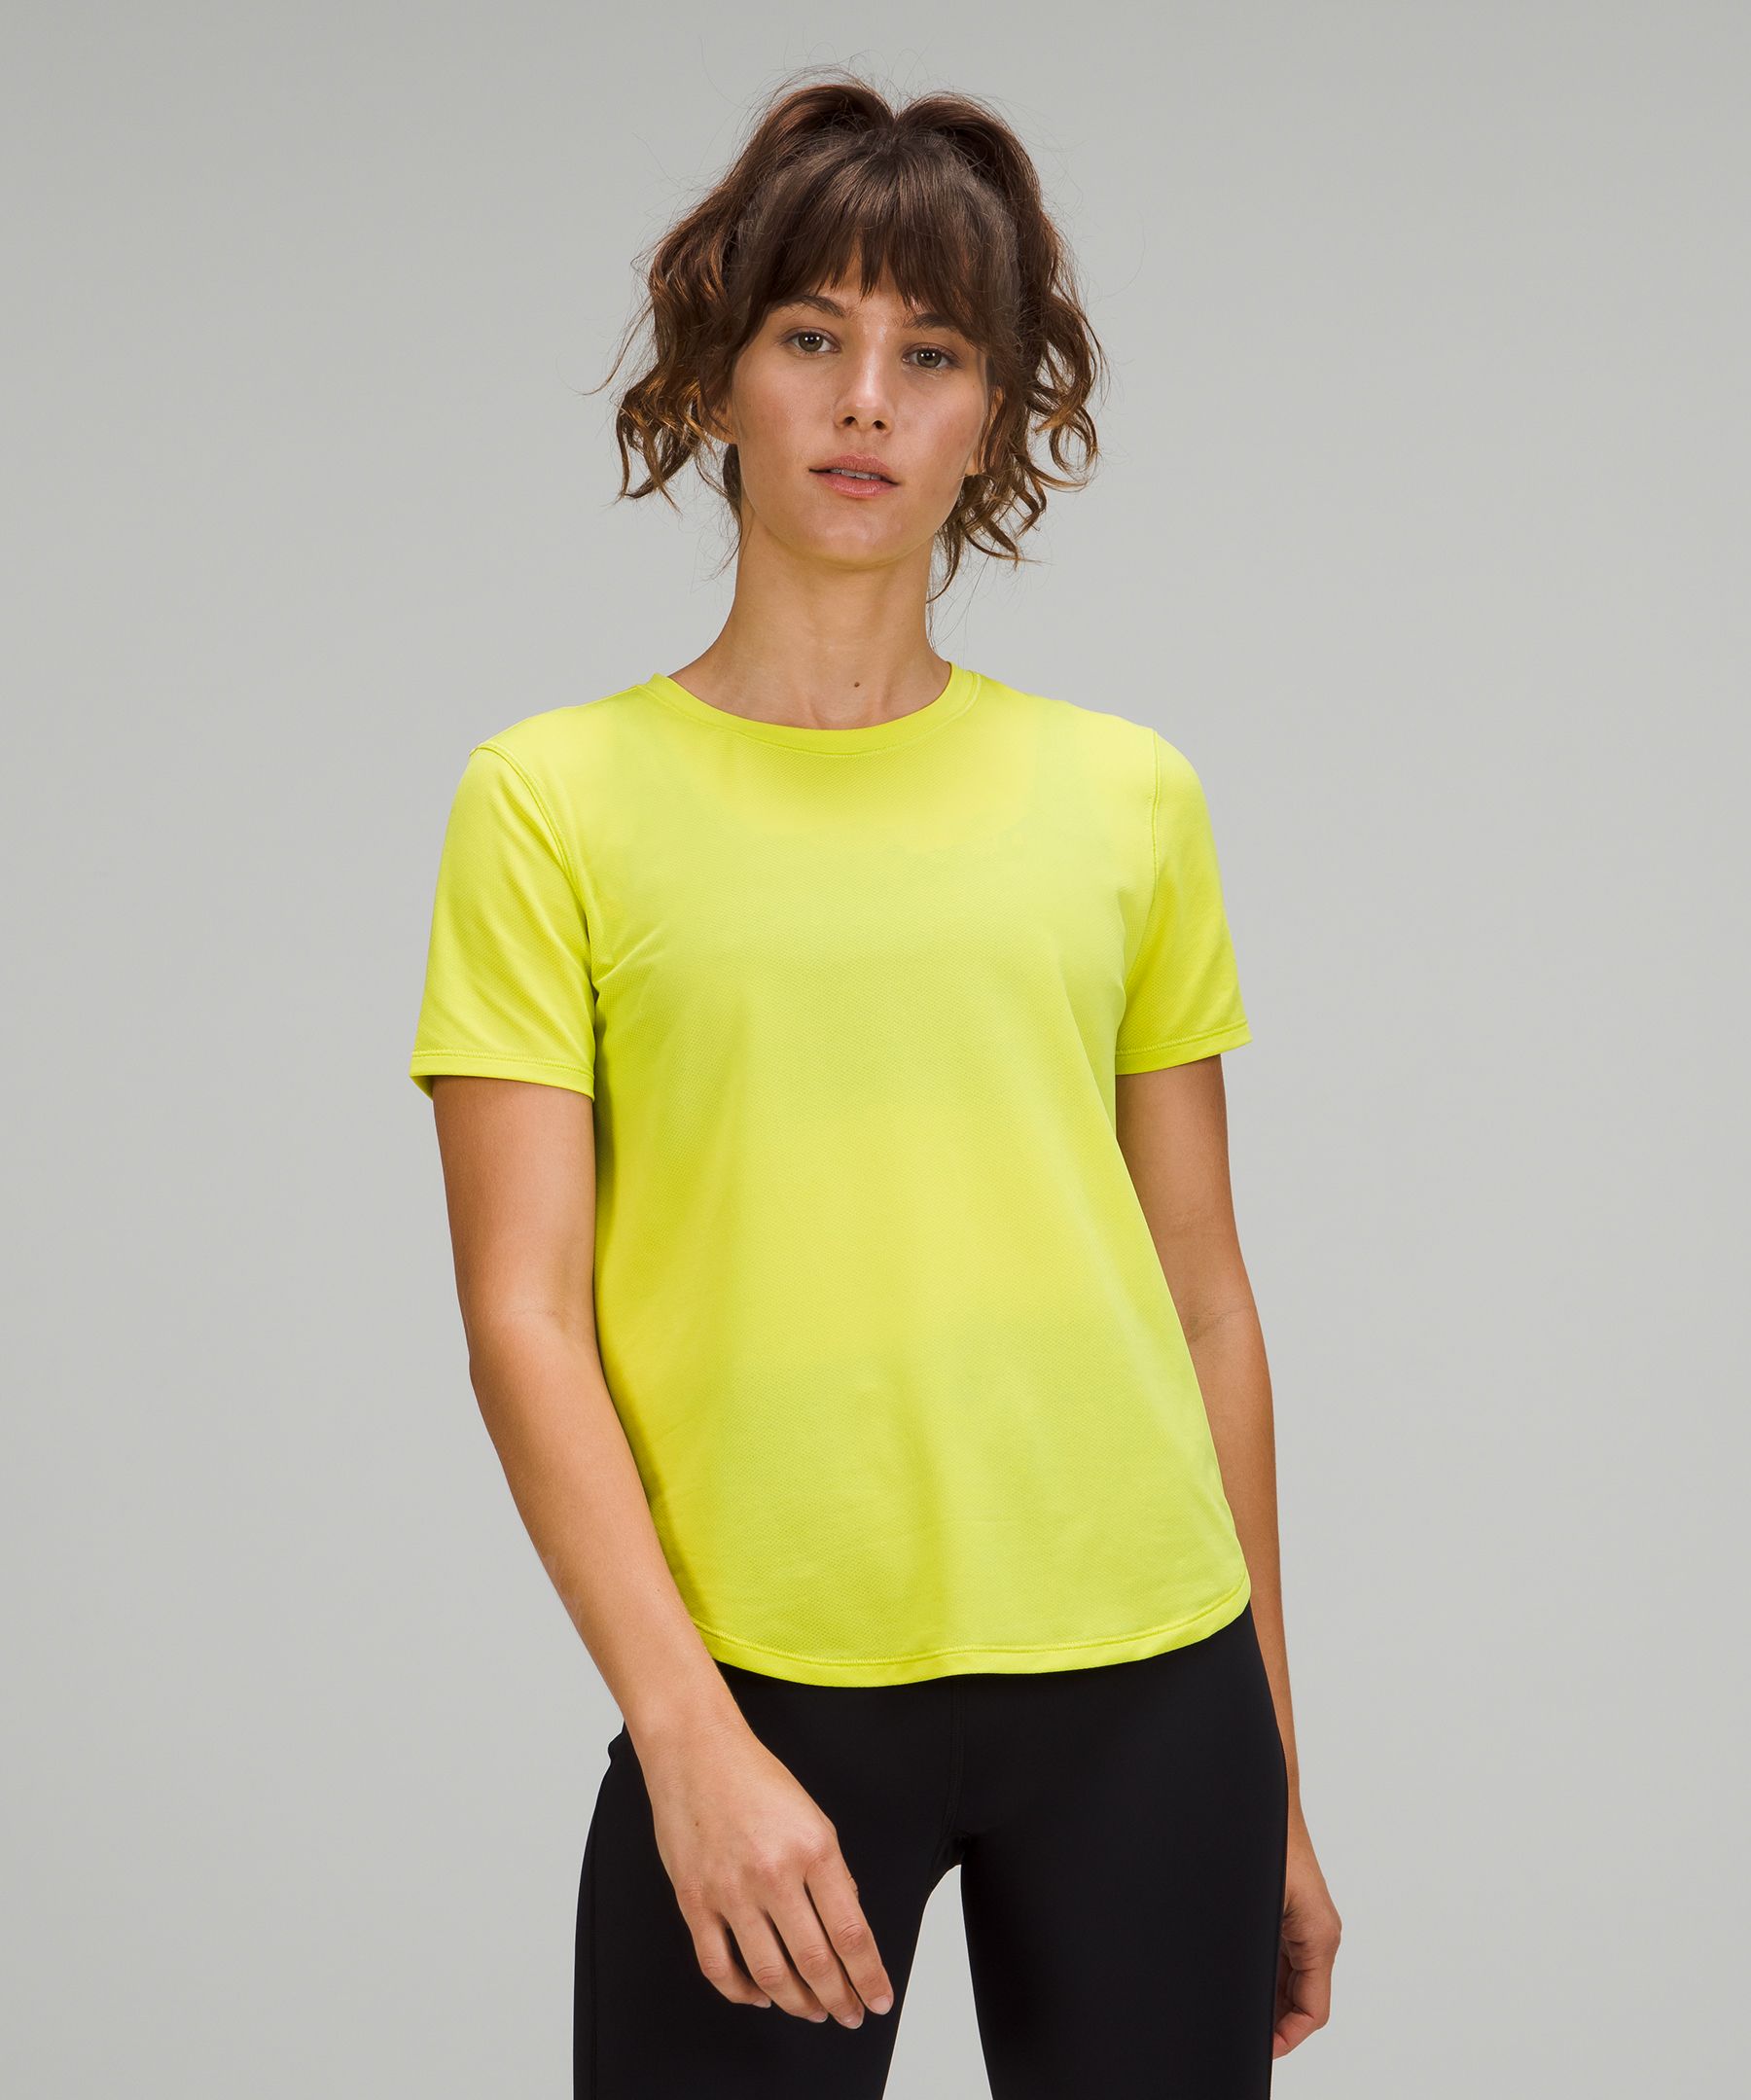 Lululemon High Neck Running And Training T-shirt In Yellow